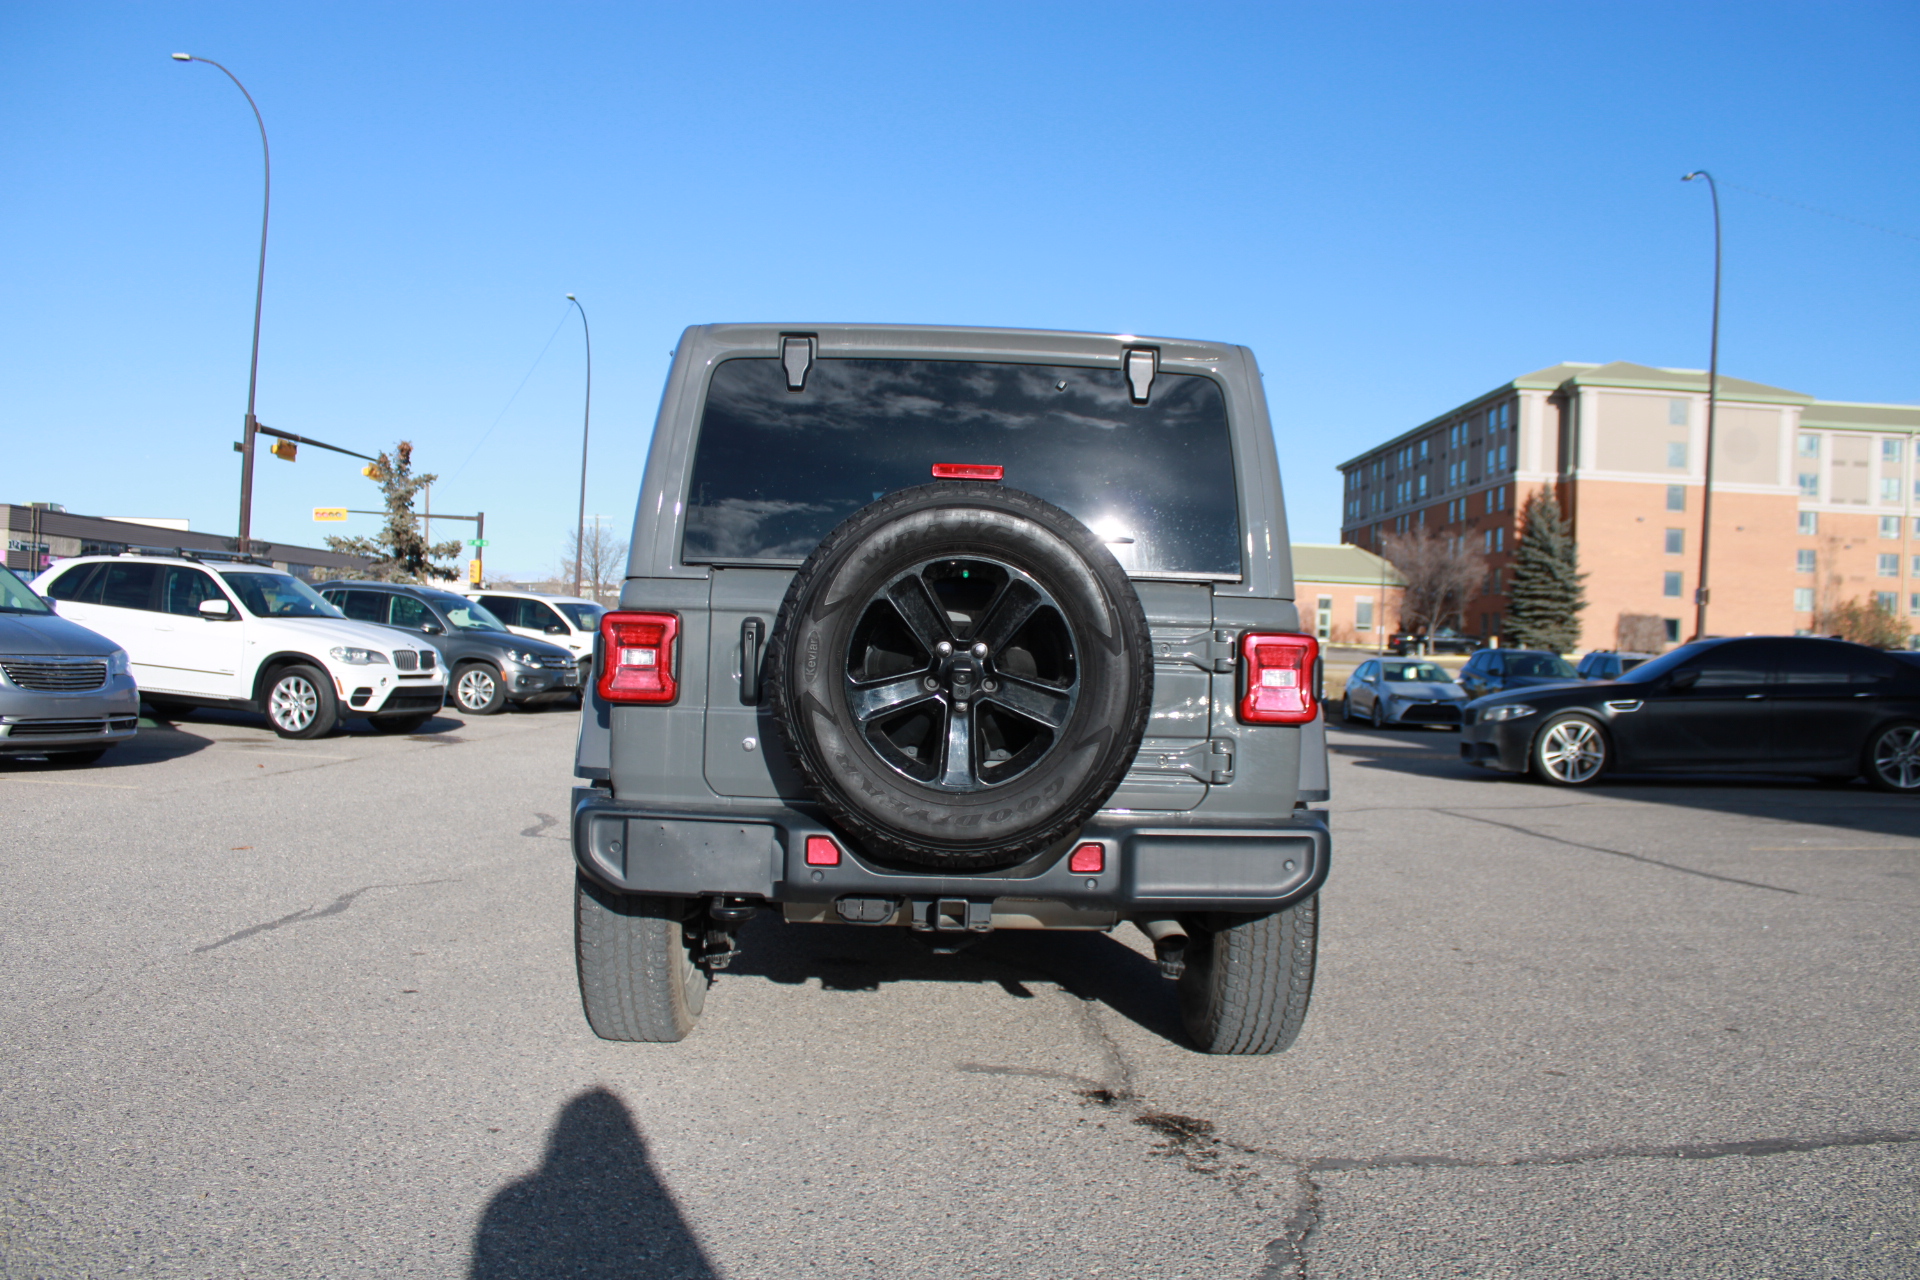 Preowned 2020 Jeep Wrangler Unlimited Sahara in Calgary Alberta